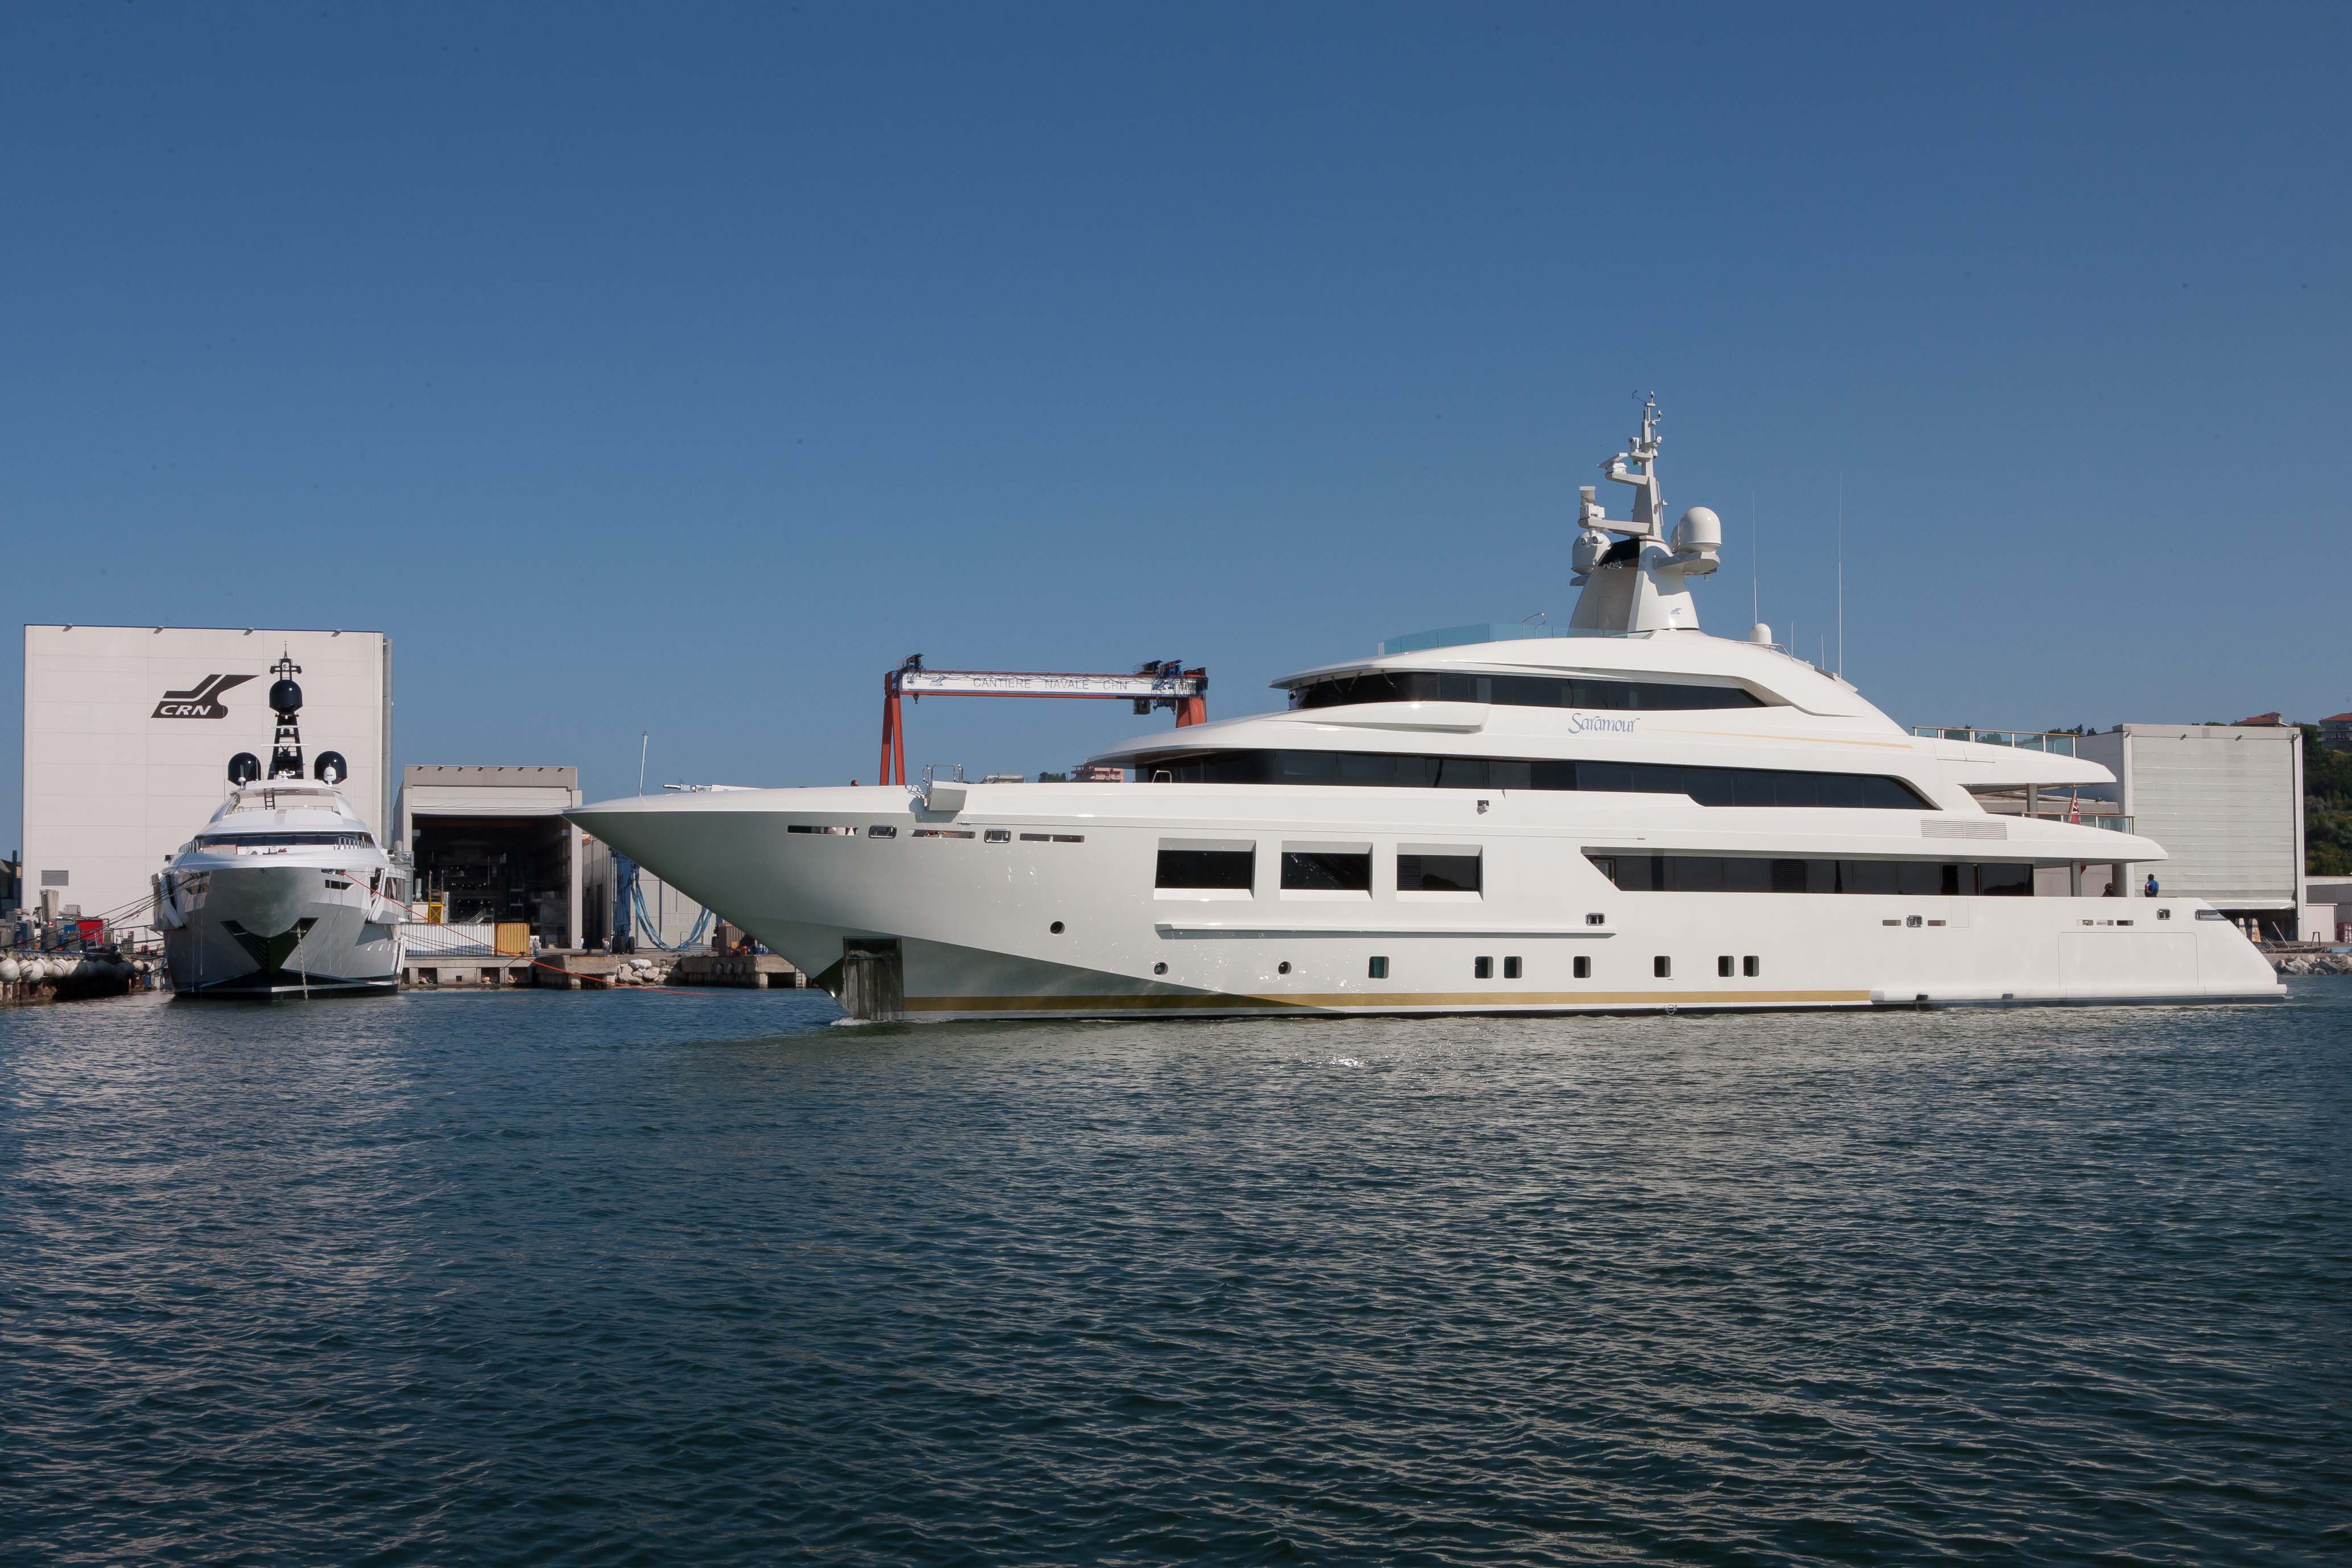 M Crn Luxury Yacht Saramour Yacht Charter Superyacht News